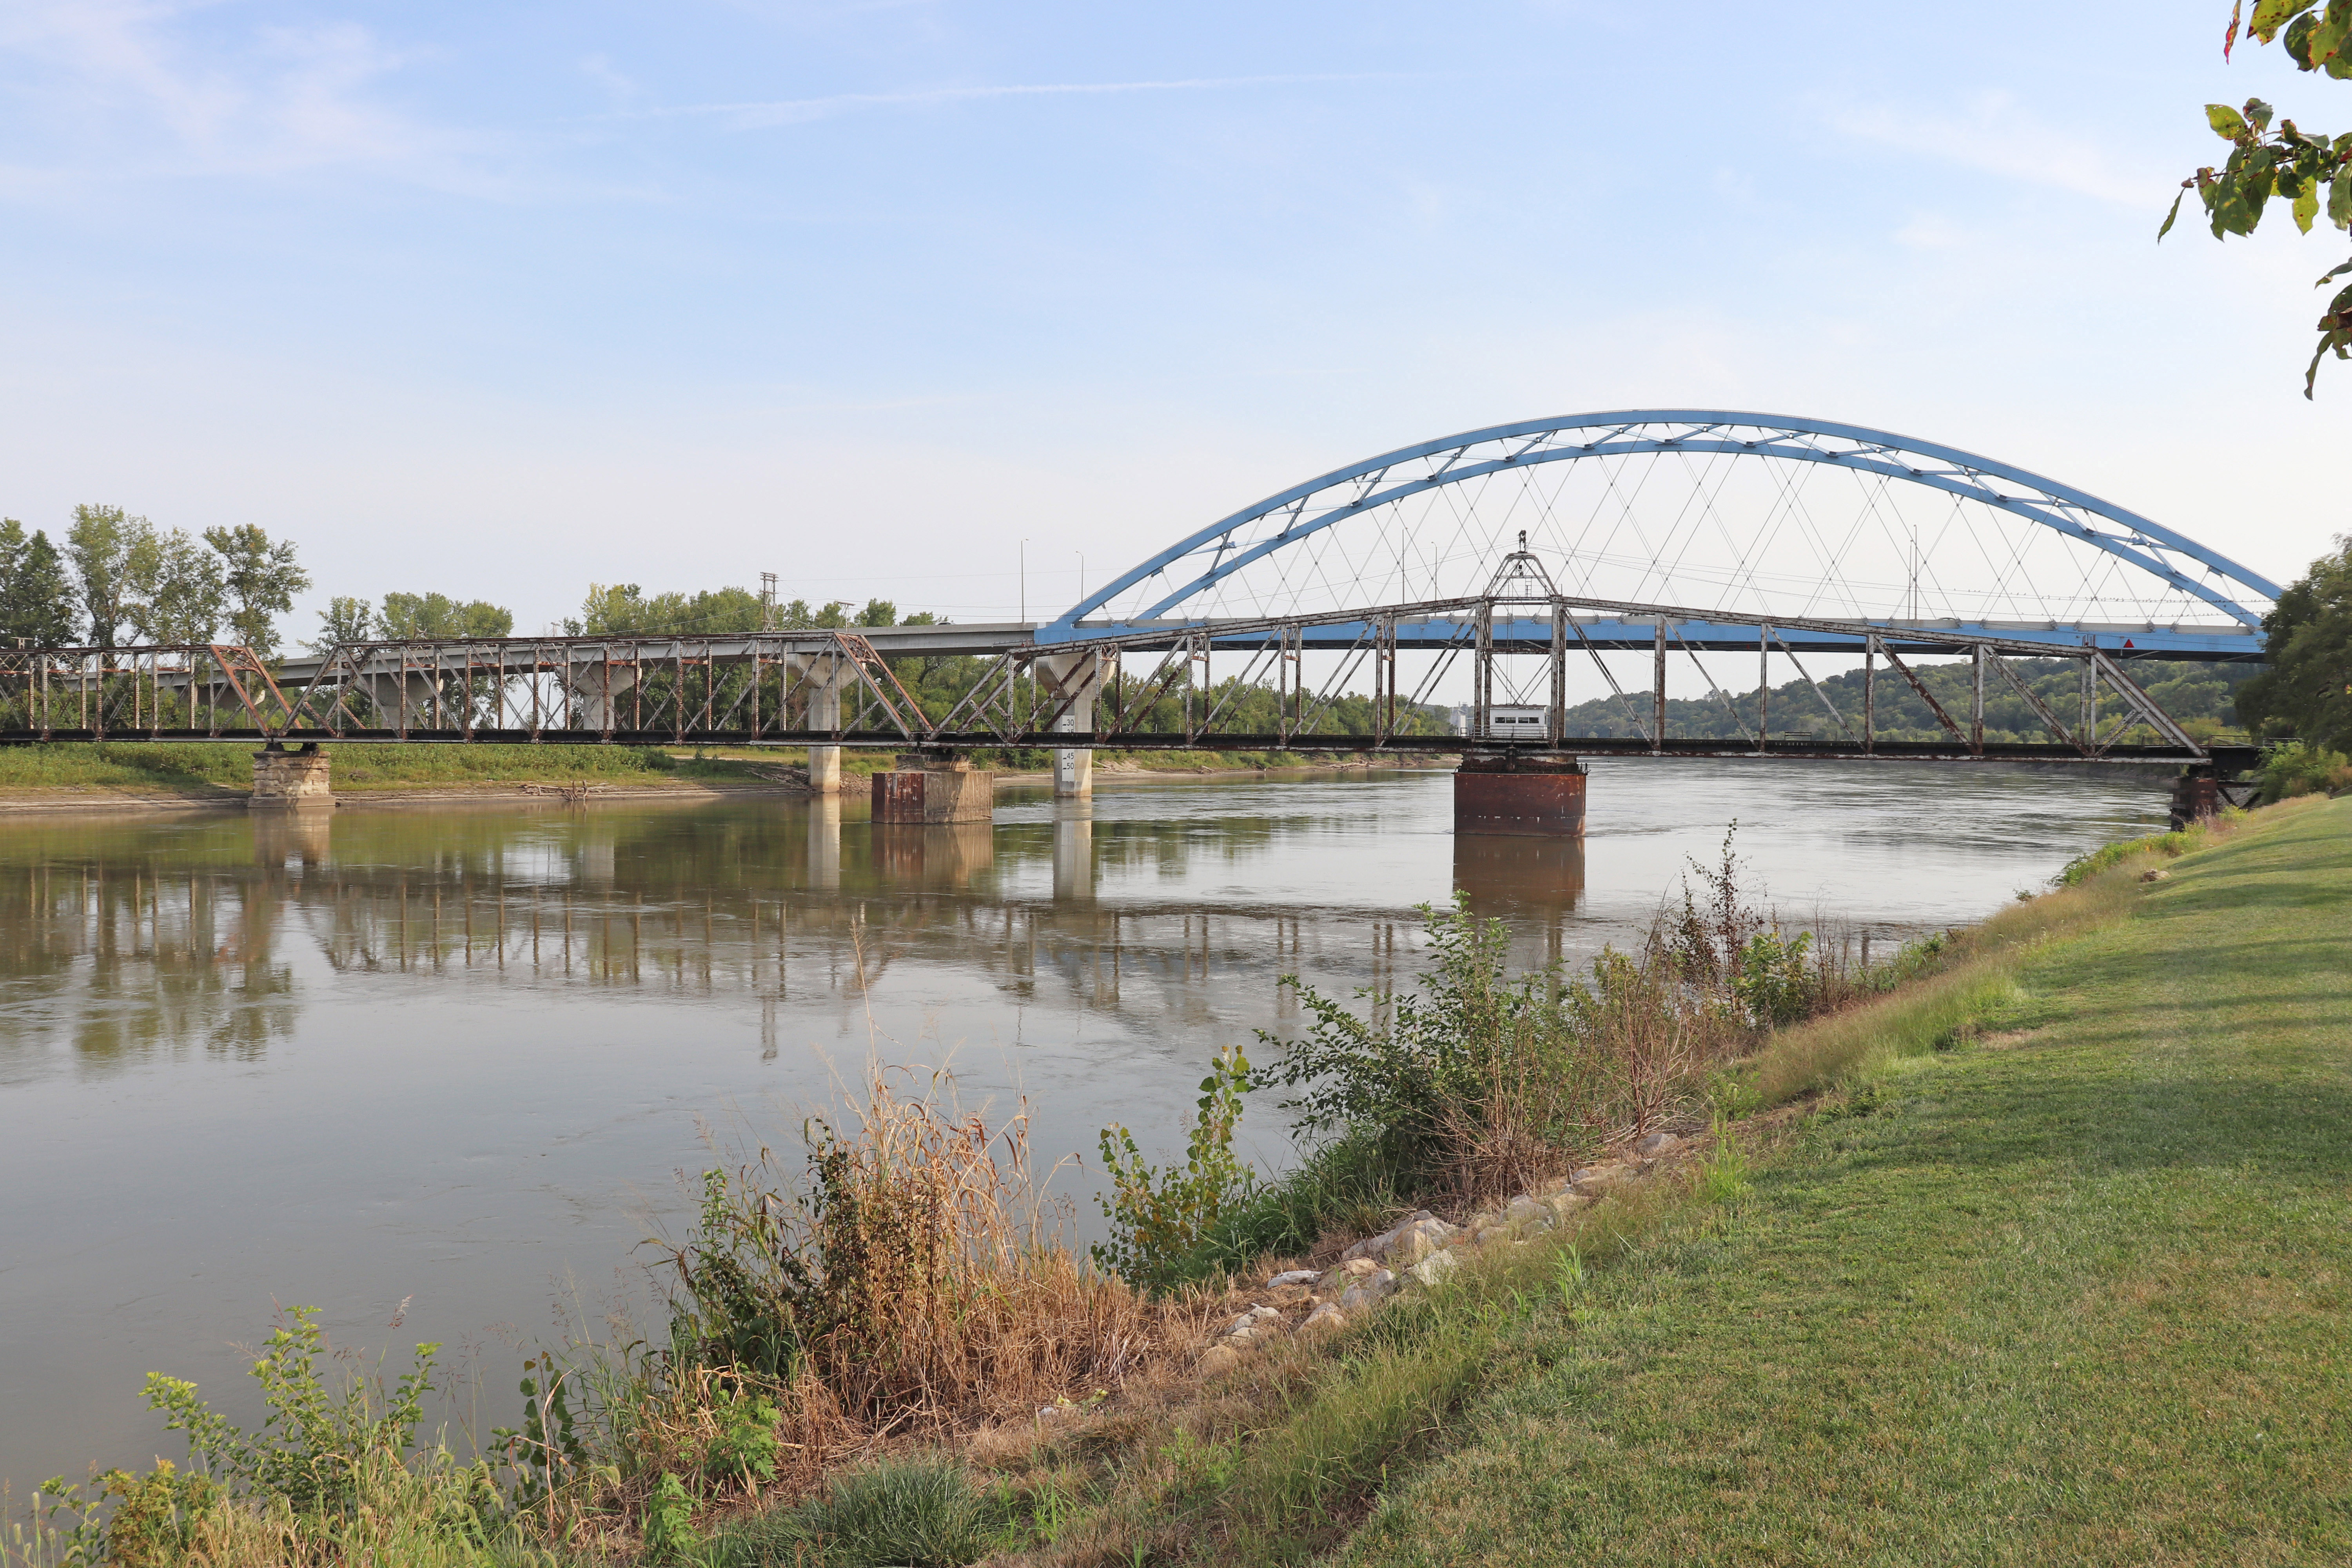 Amelia Earhart Memorial Bridge across the Missouri River at Atchison.